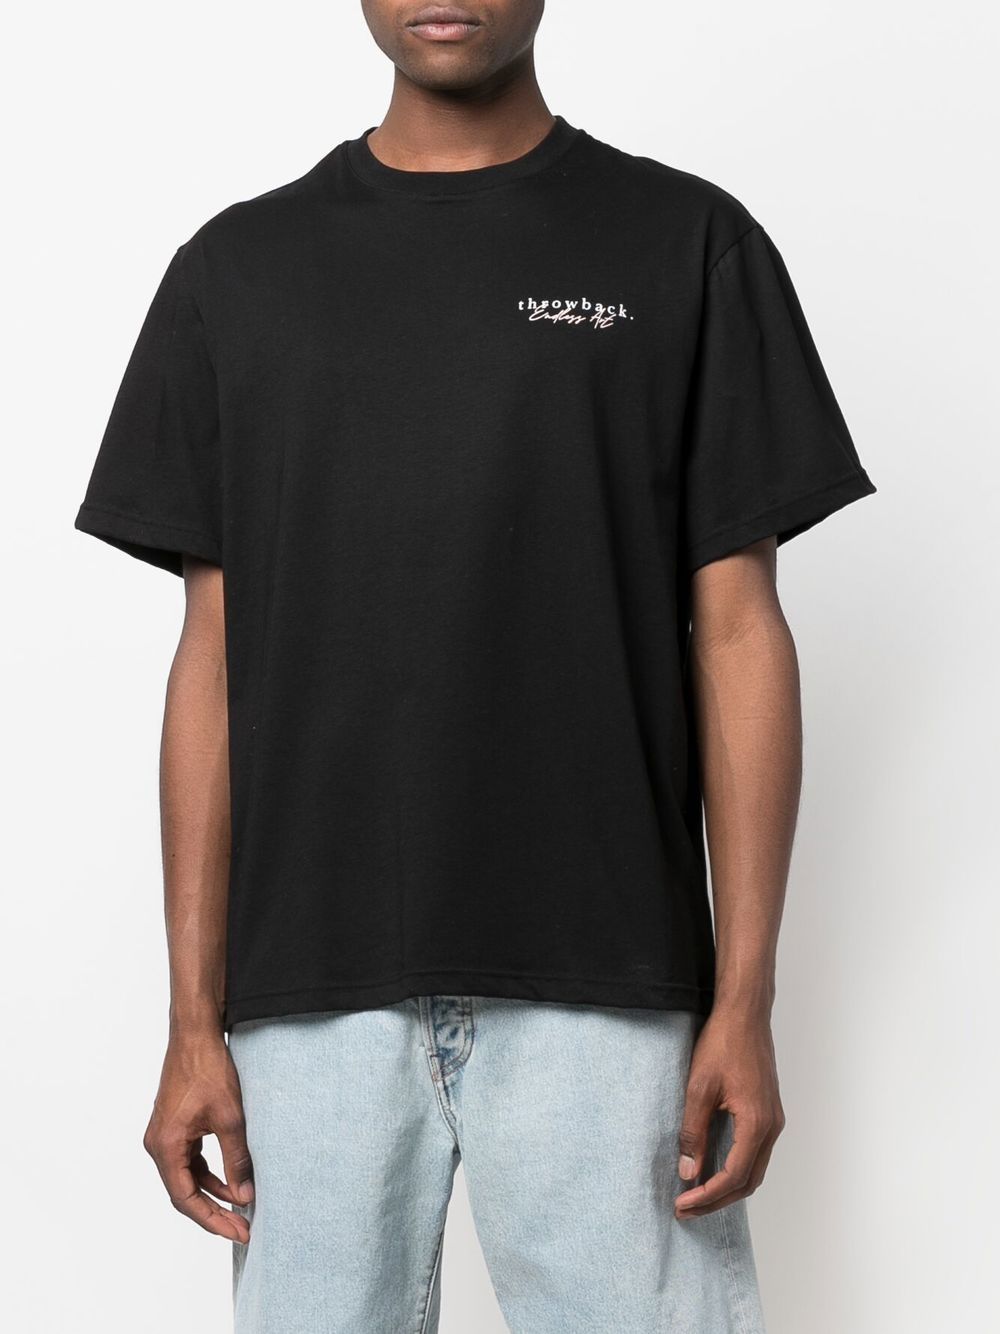 Throwback. graphic-print Cotton T-shirt - Farfetch